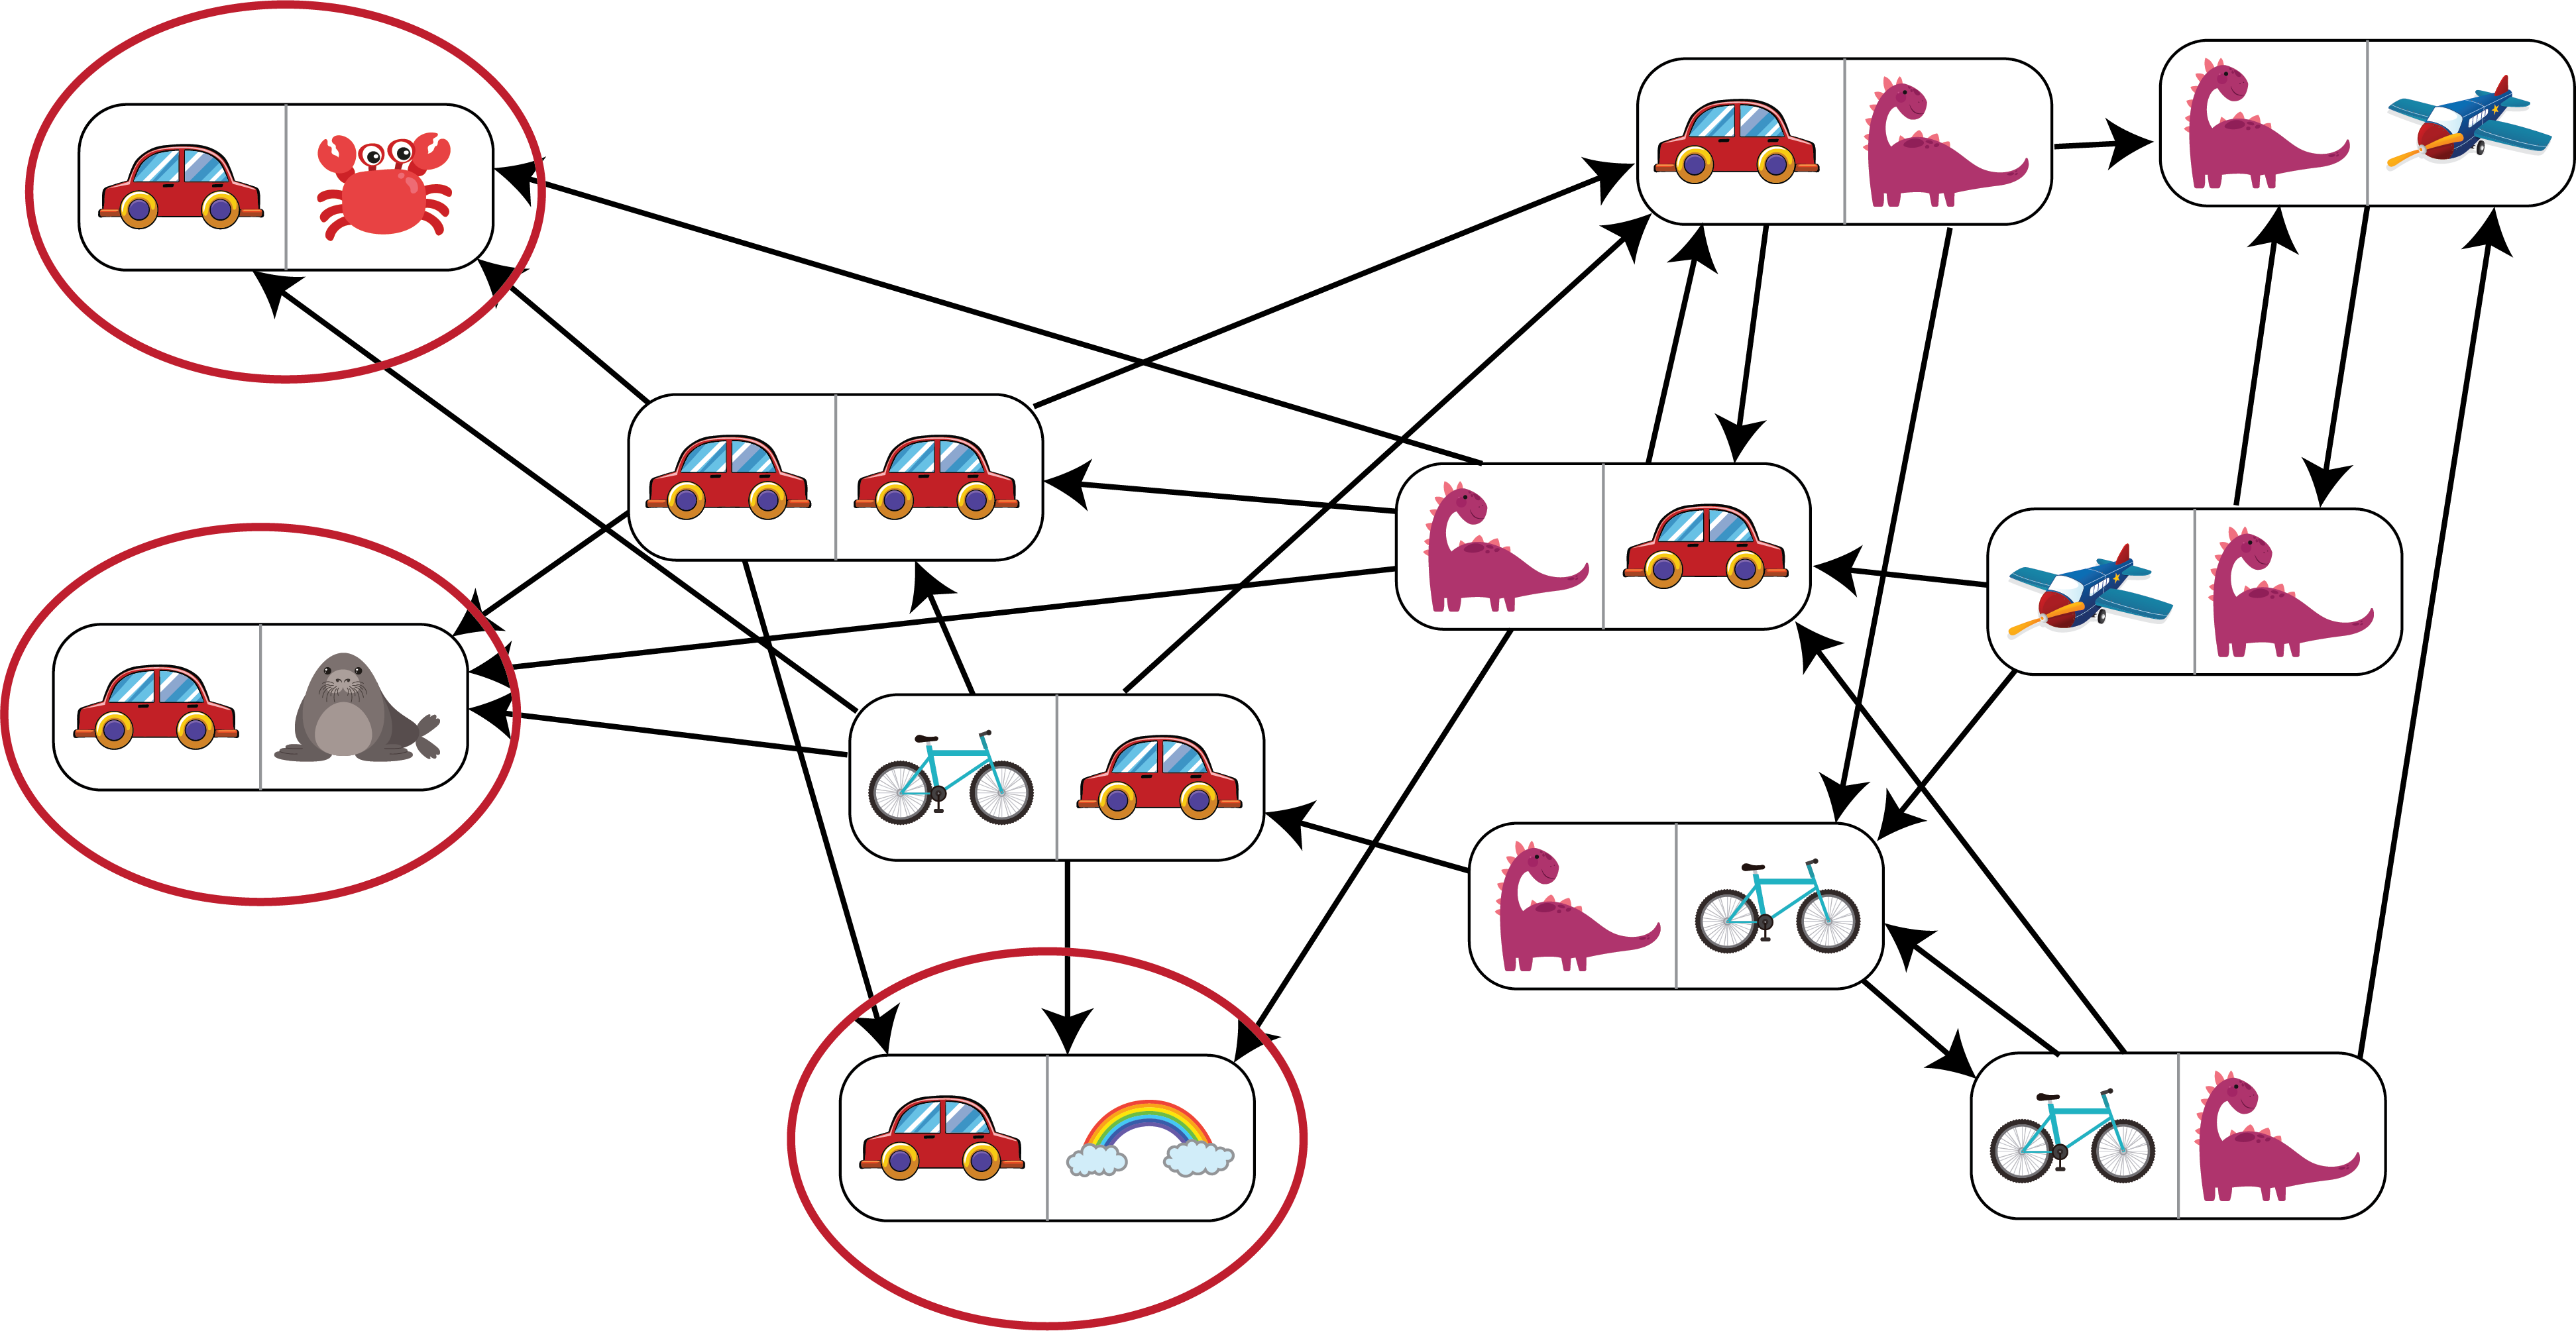 The circled cards are Car/Crab, Car/Walrus,
and Car/Rainbow.